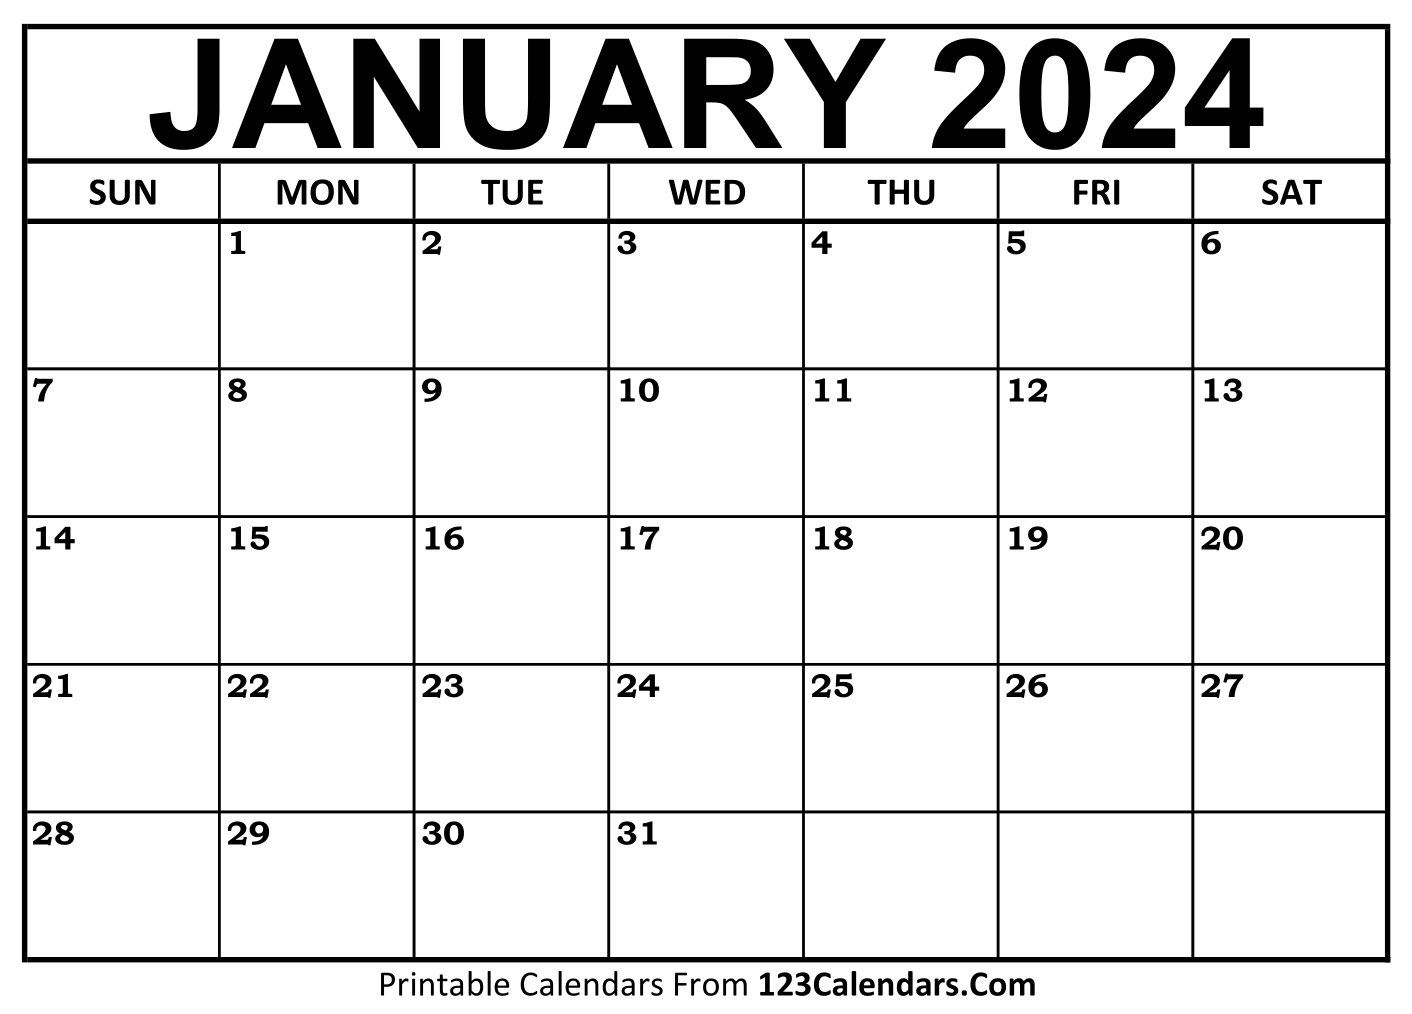 Printable January 2024 Calendar Templates - 123Calendars | Free Printable Calendar 2024 Jan